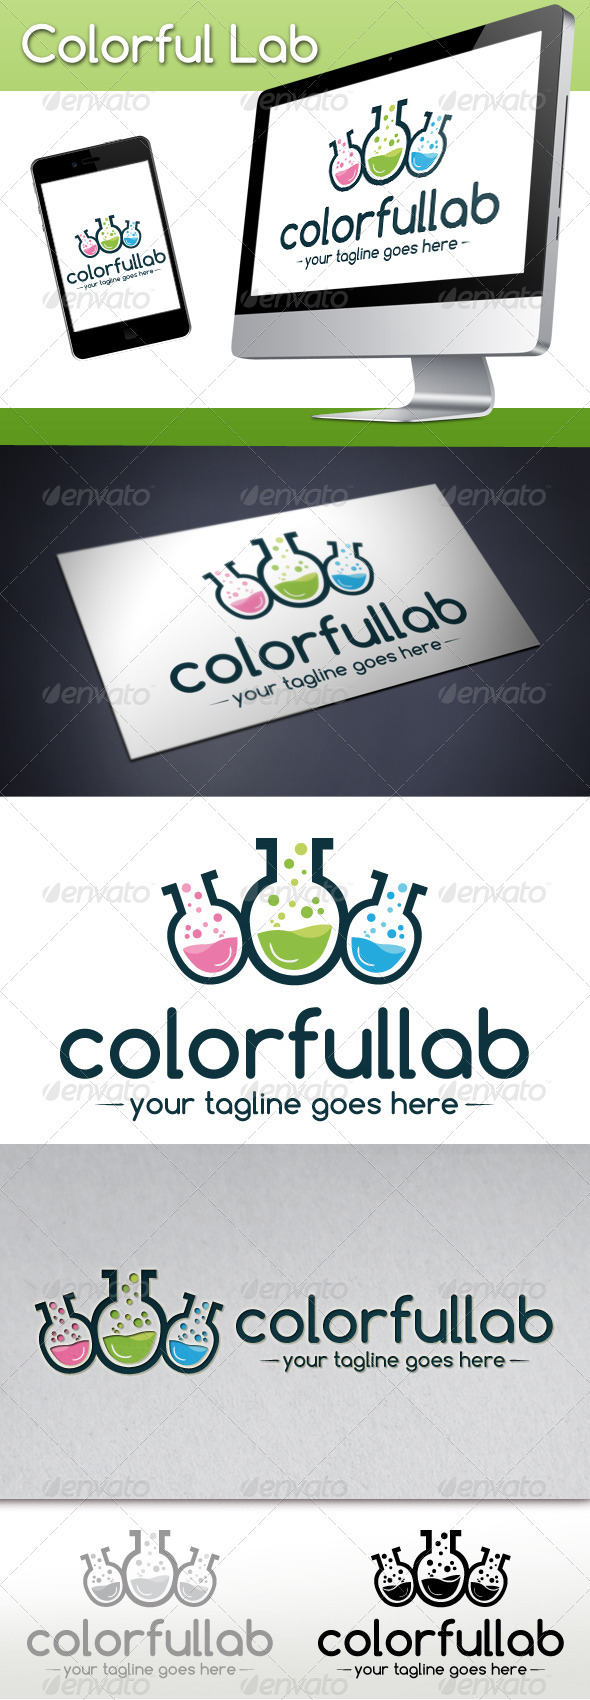 Colorful Lab Logo Template photo - 1